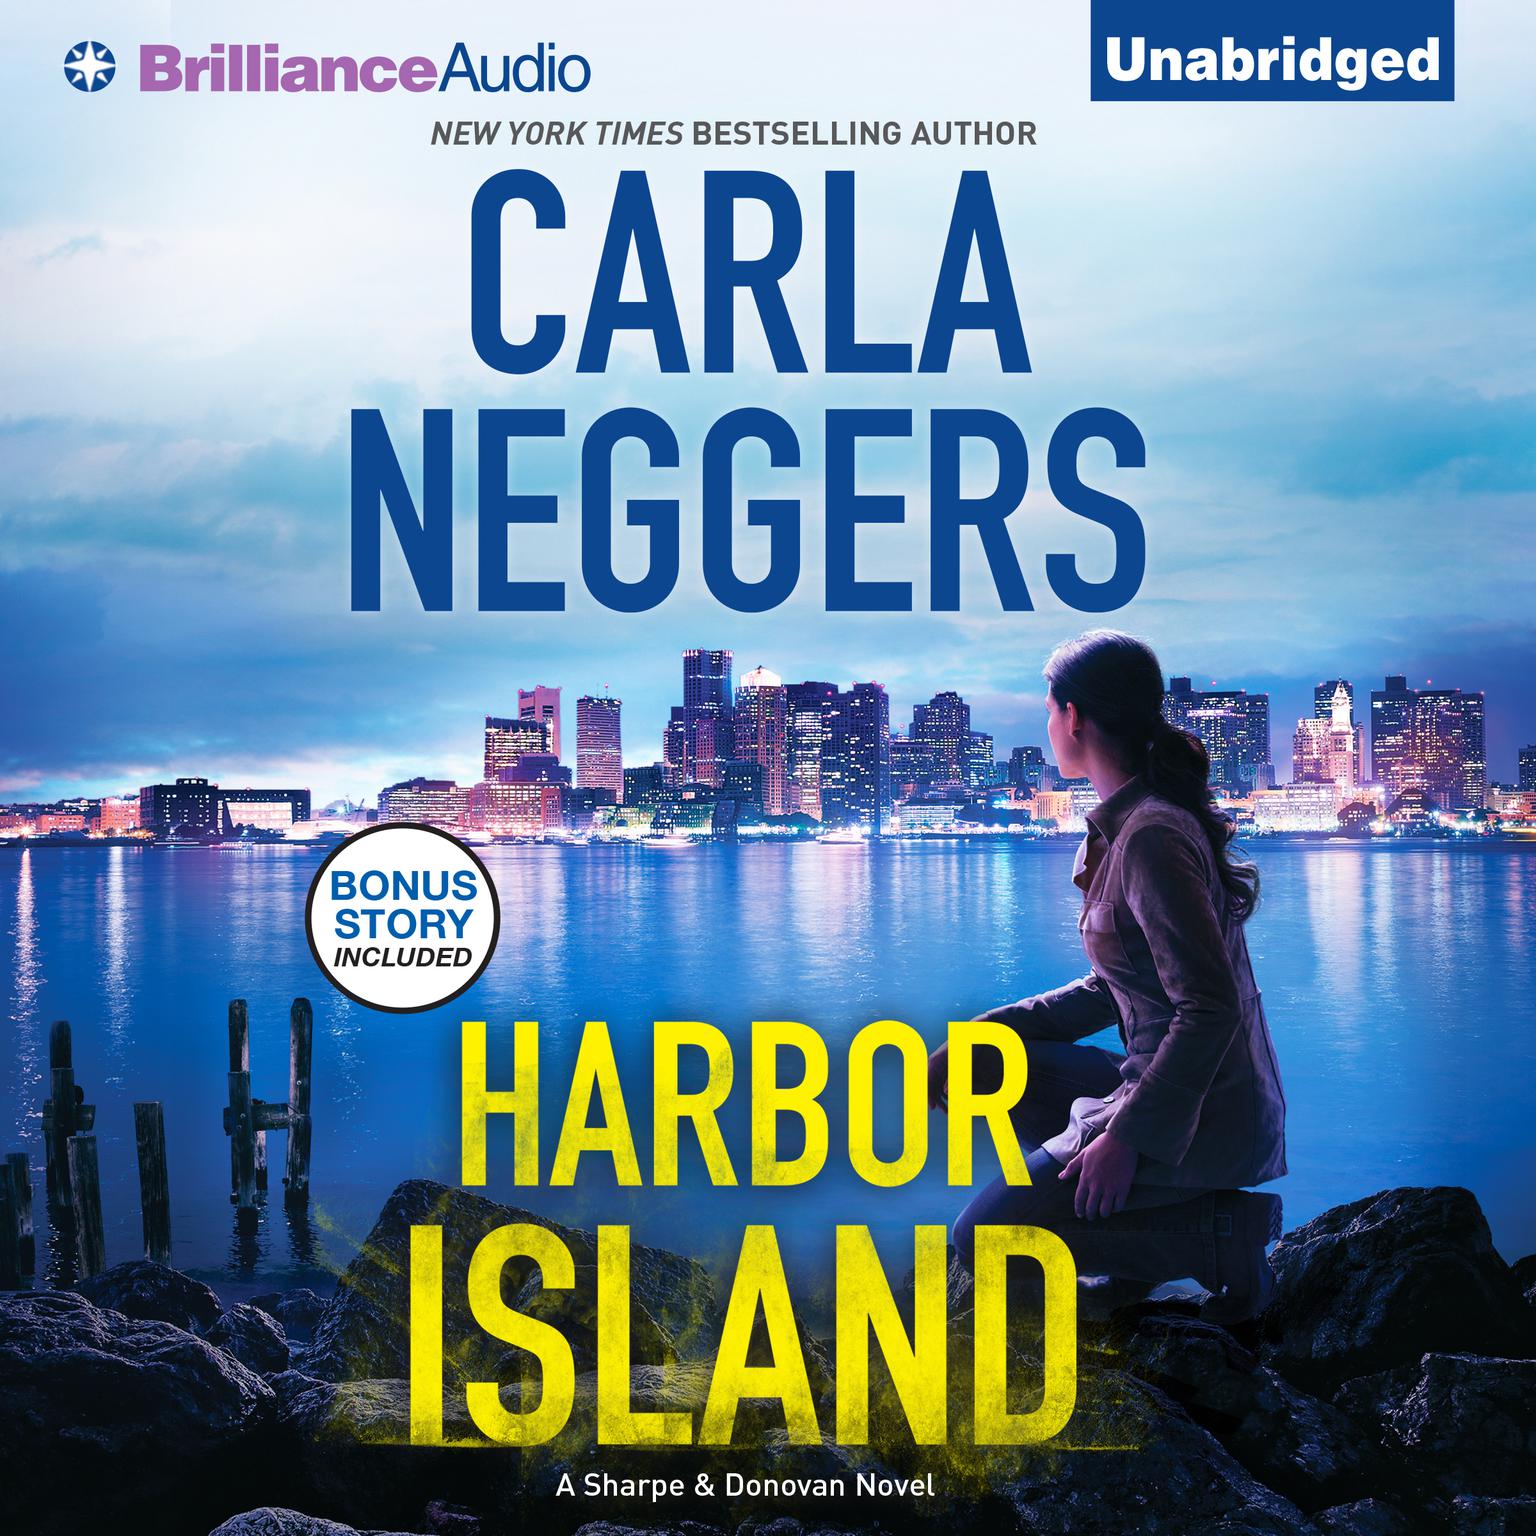 Harbor Island Audiobook, by Carla Neggers